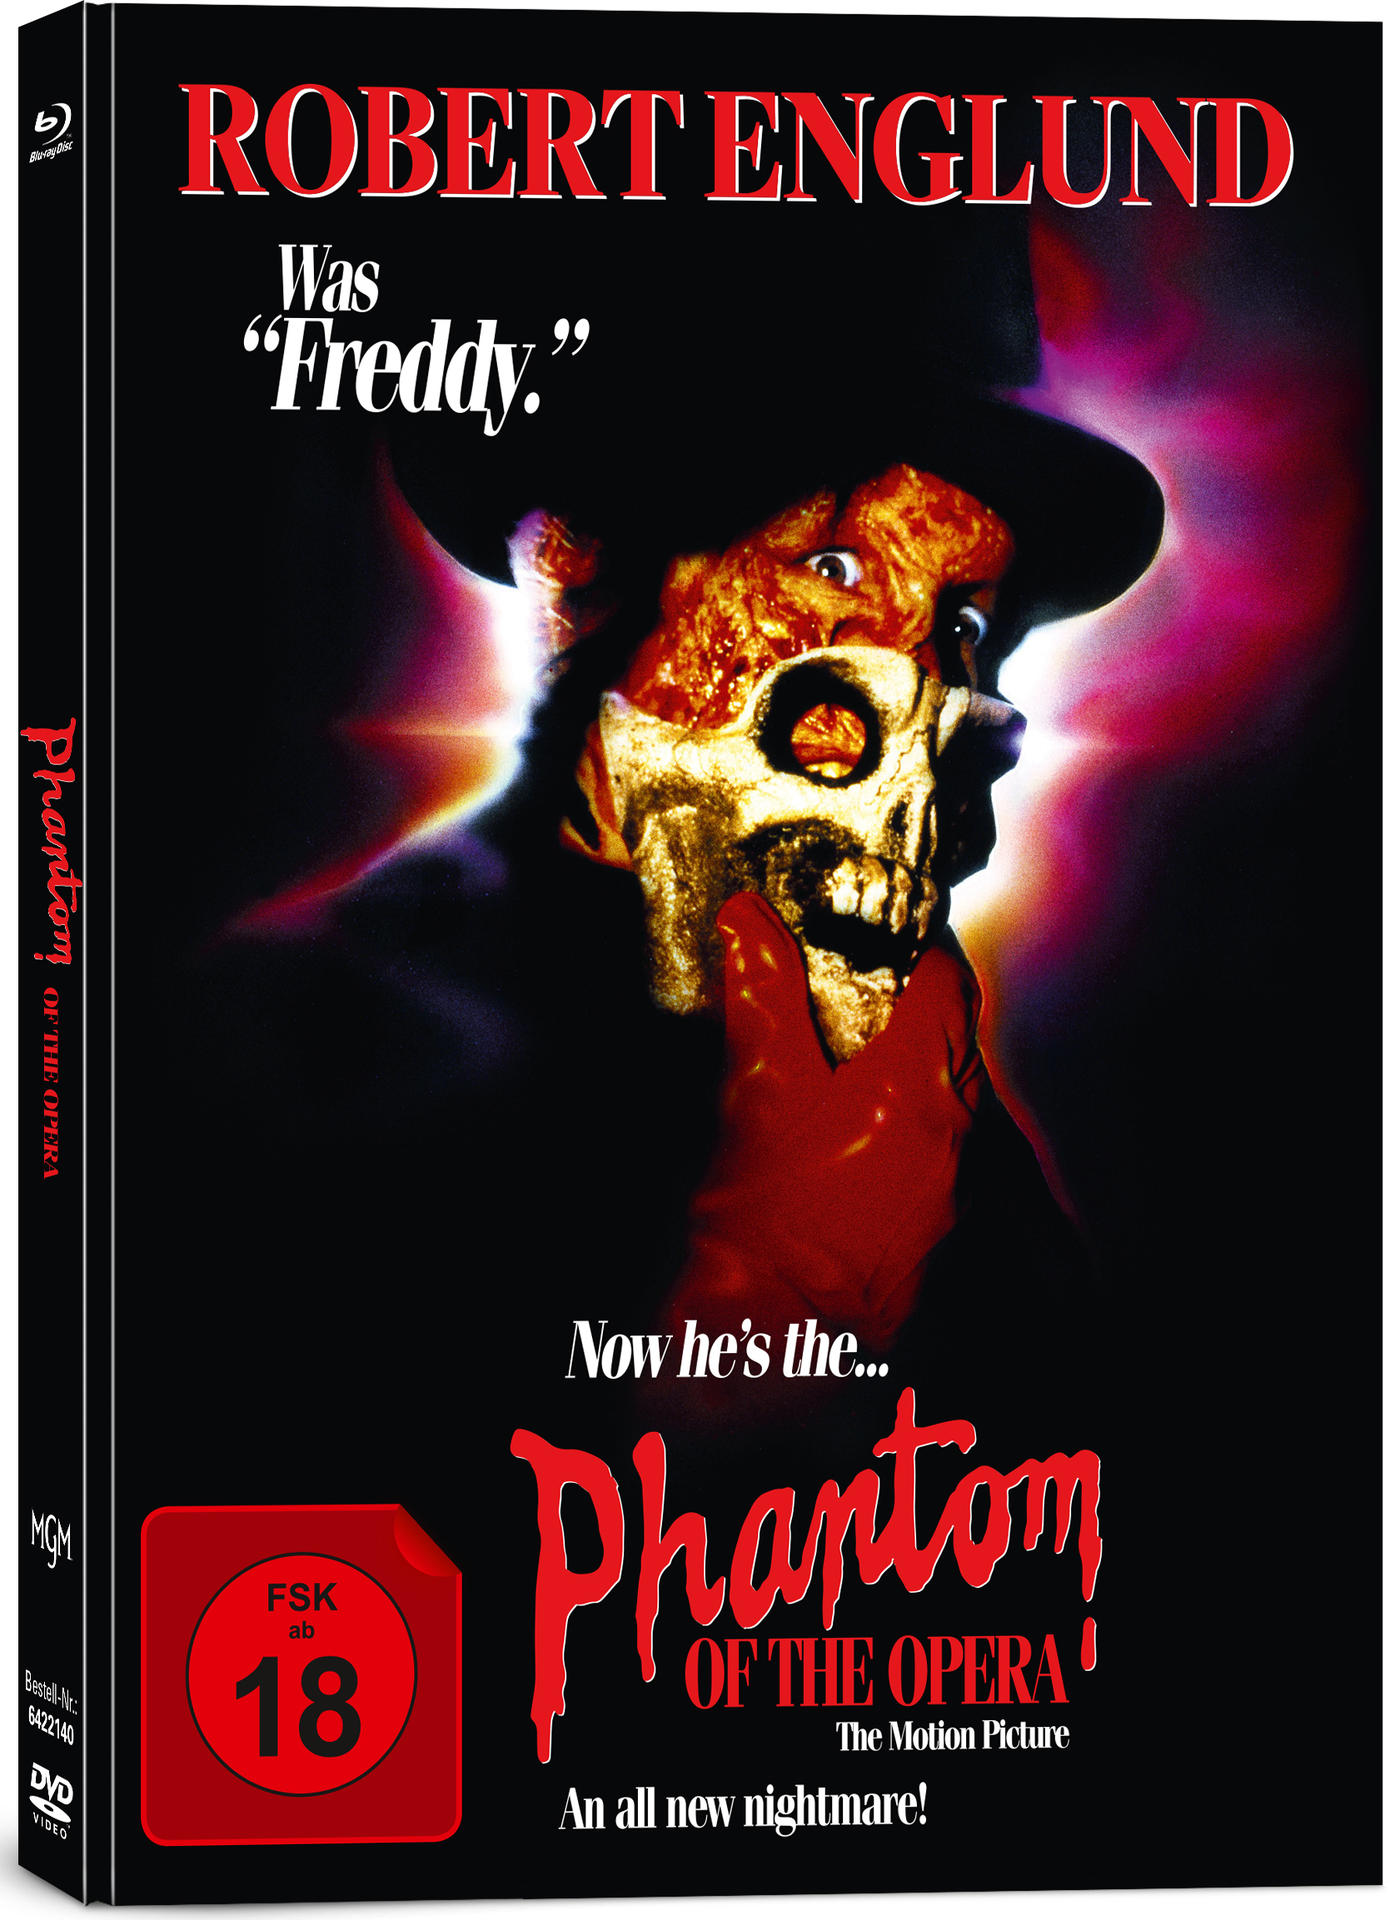 Blu-ray DVD of Phantom Opera + the